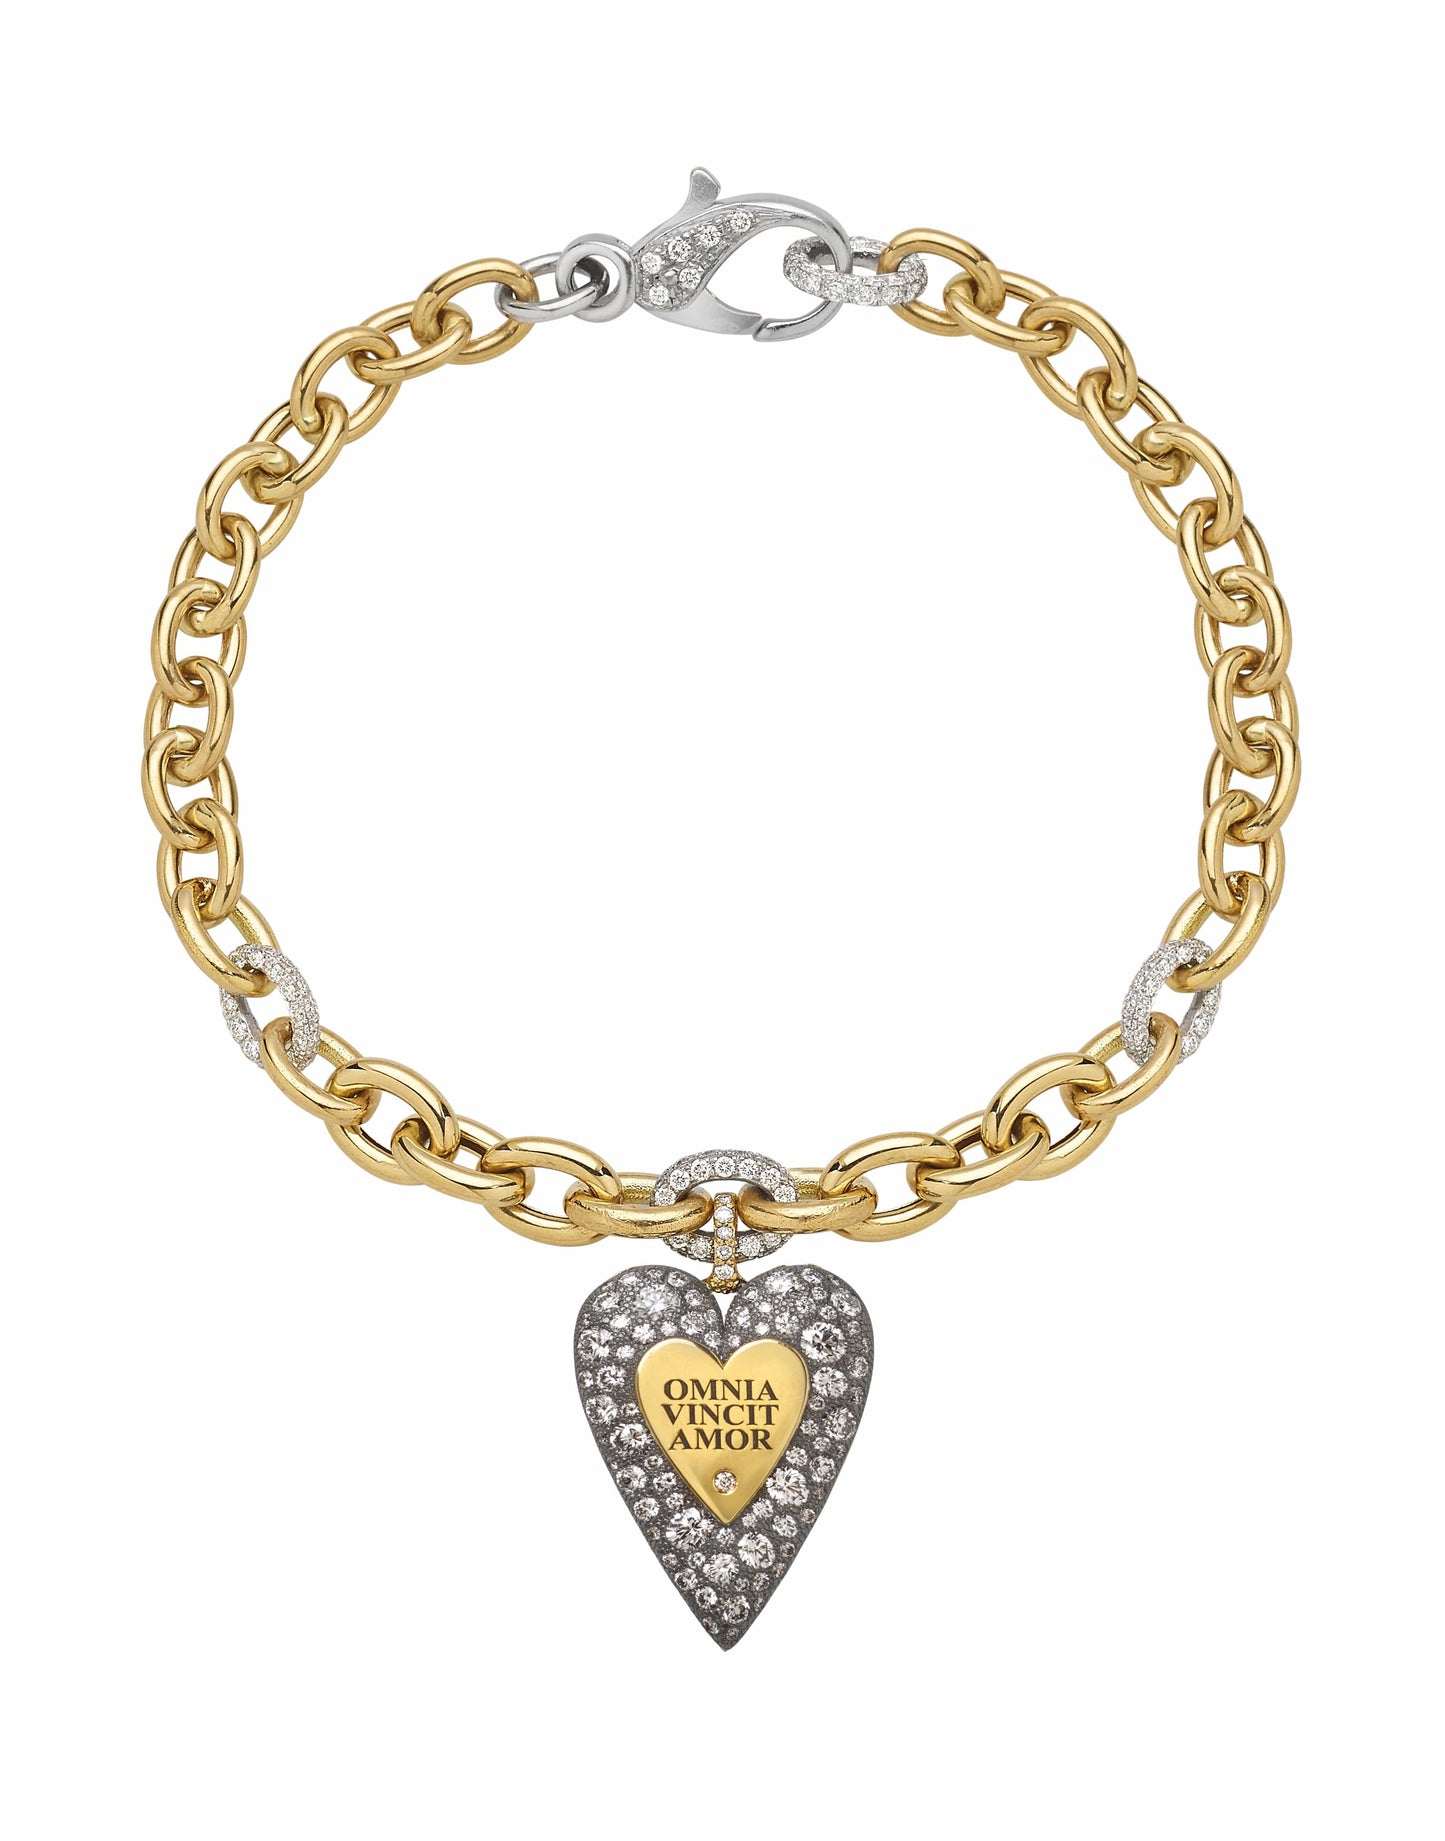 MARIANI-Omnia Vincit Amor Bracelet-YELLOW GOLD